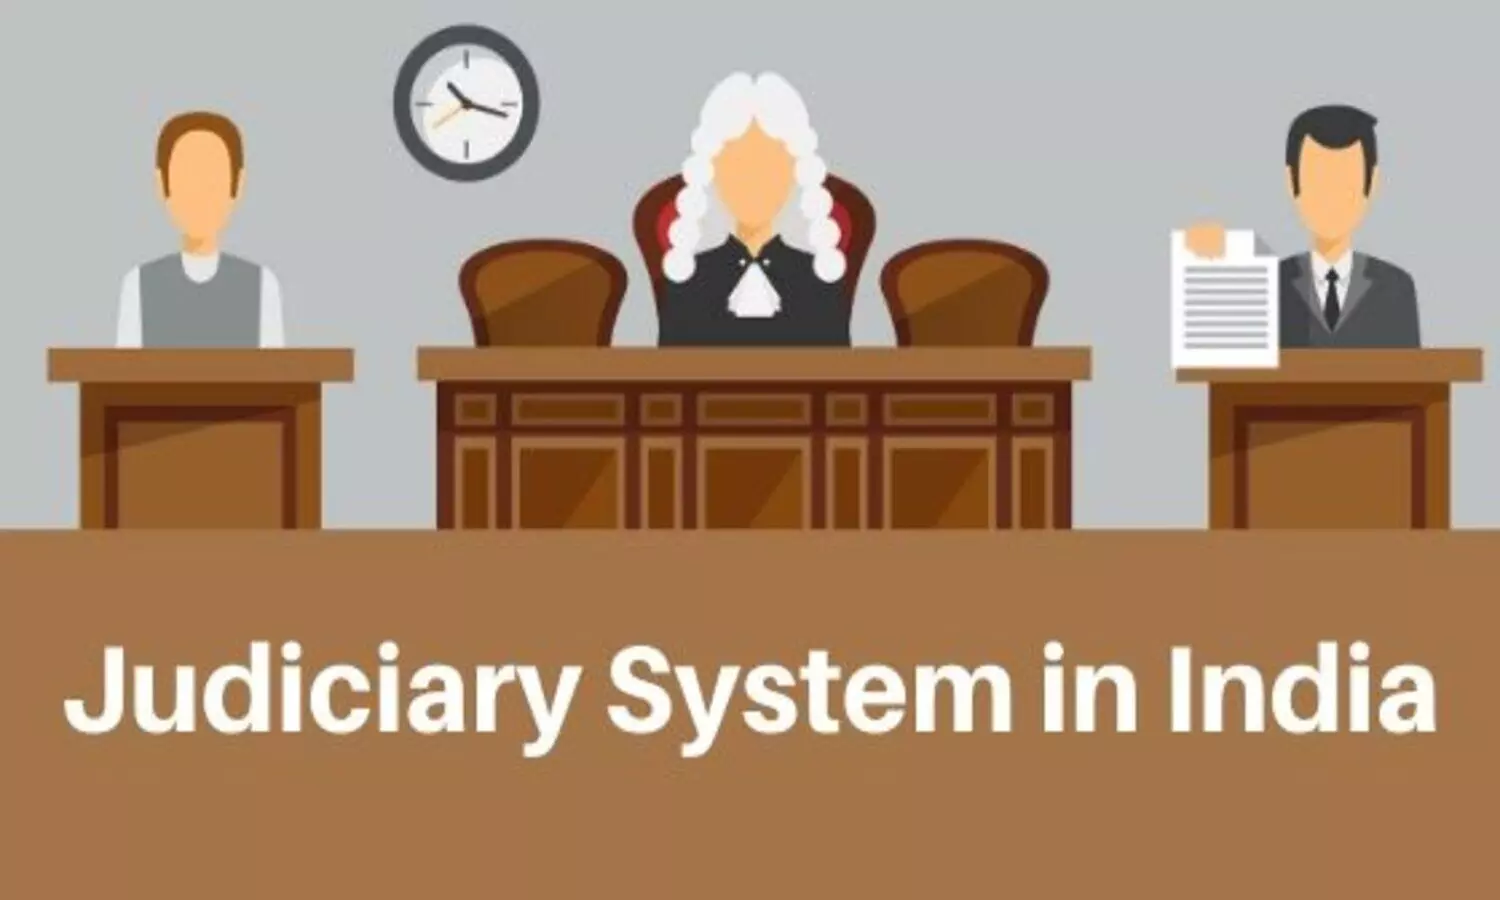 Indian Judiciary System